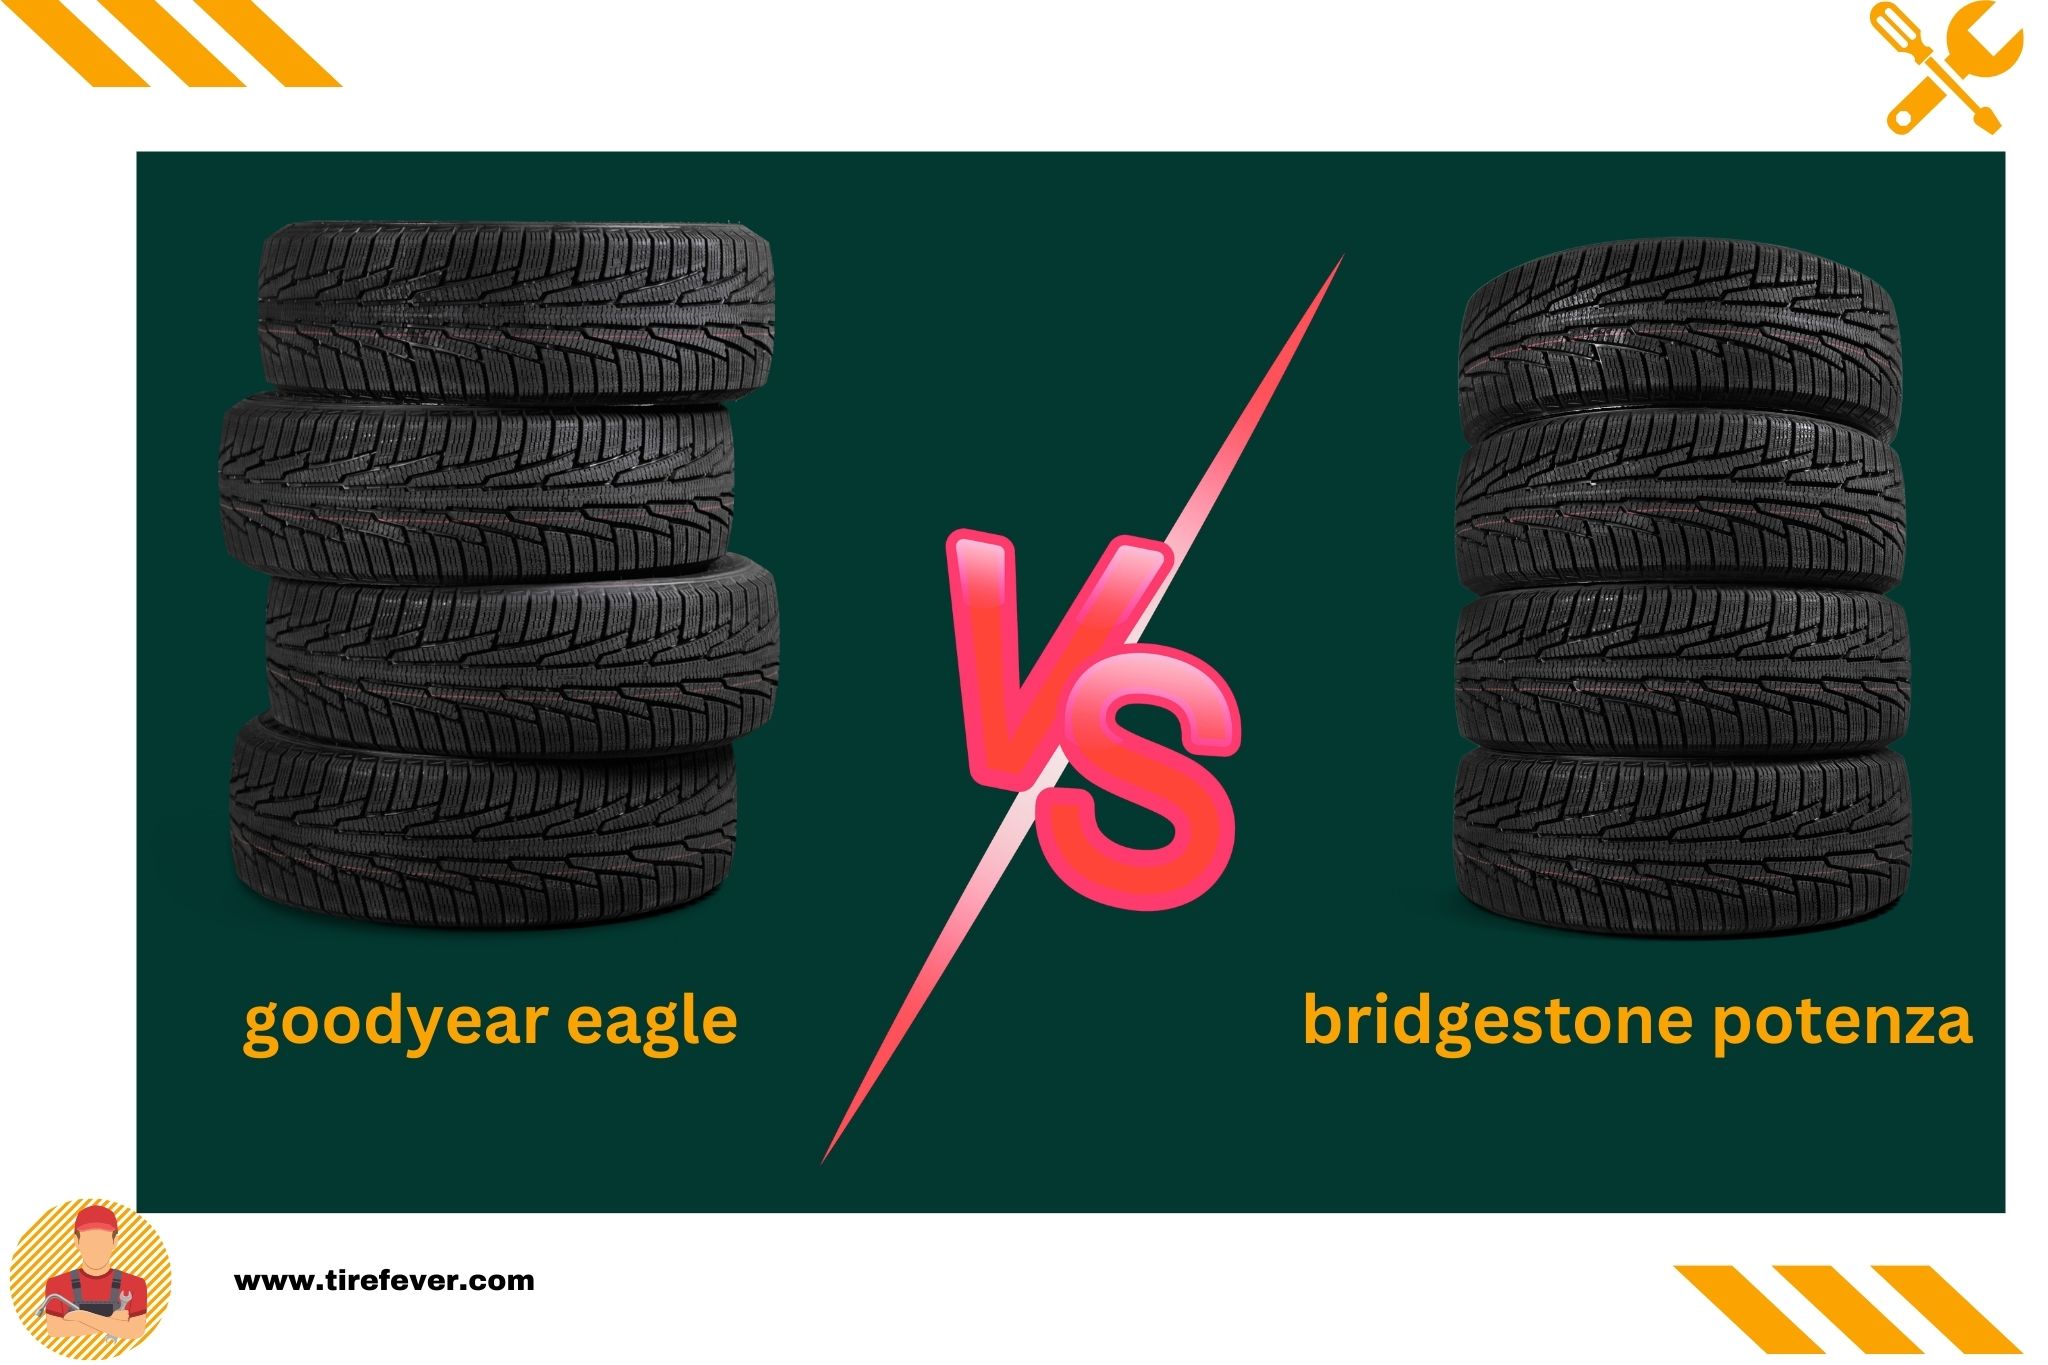 goodyear eagle vs bridgestone potenza